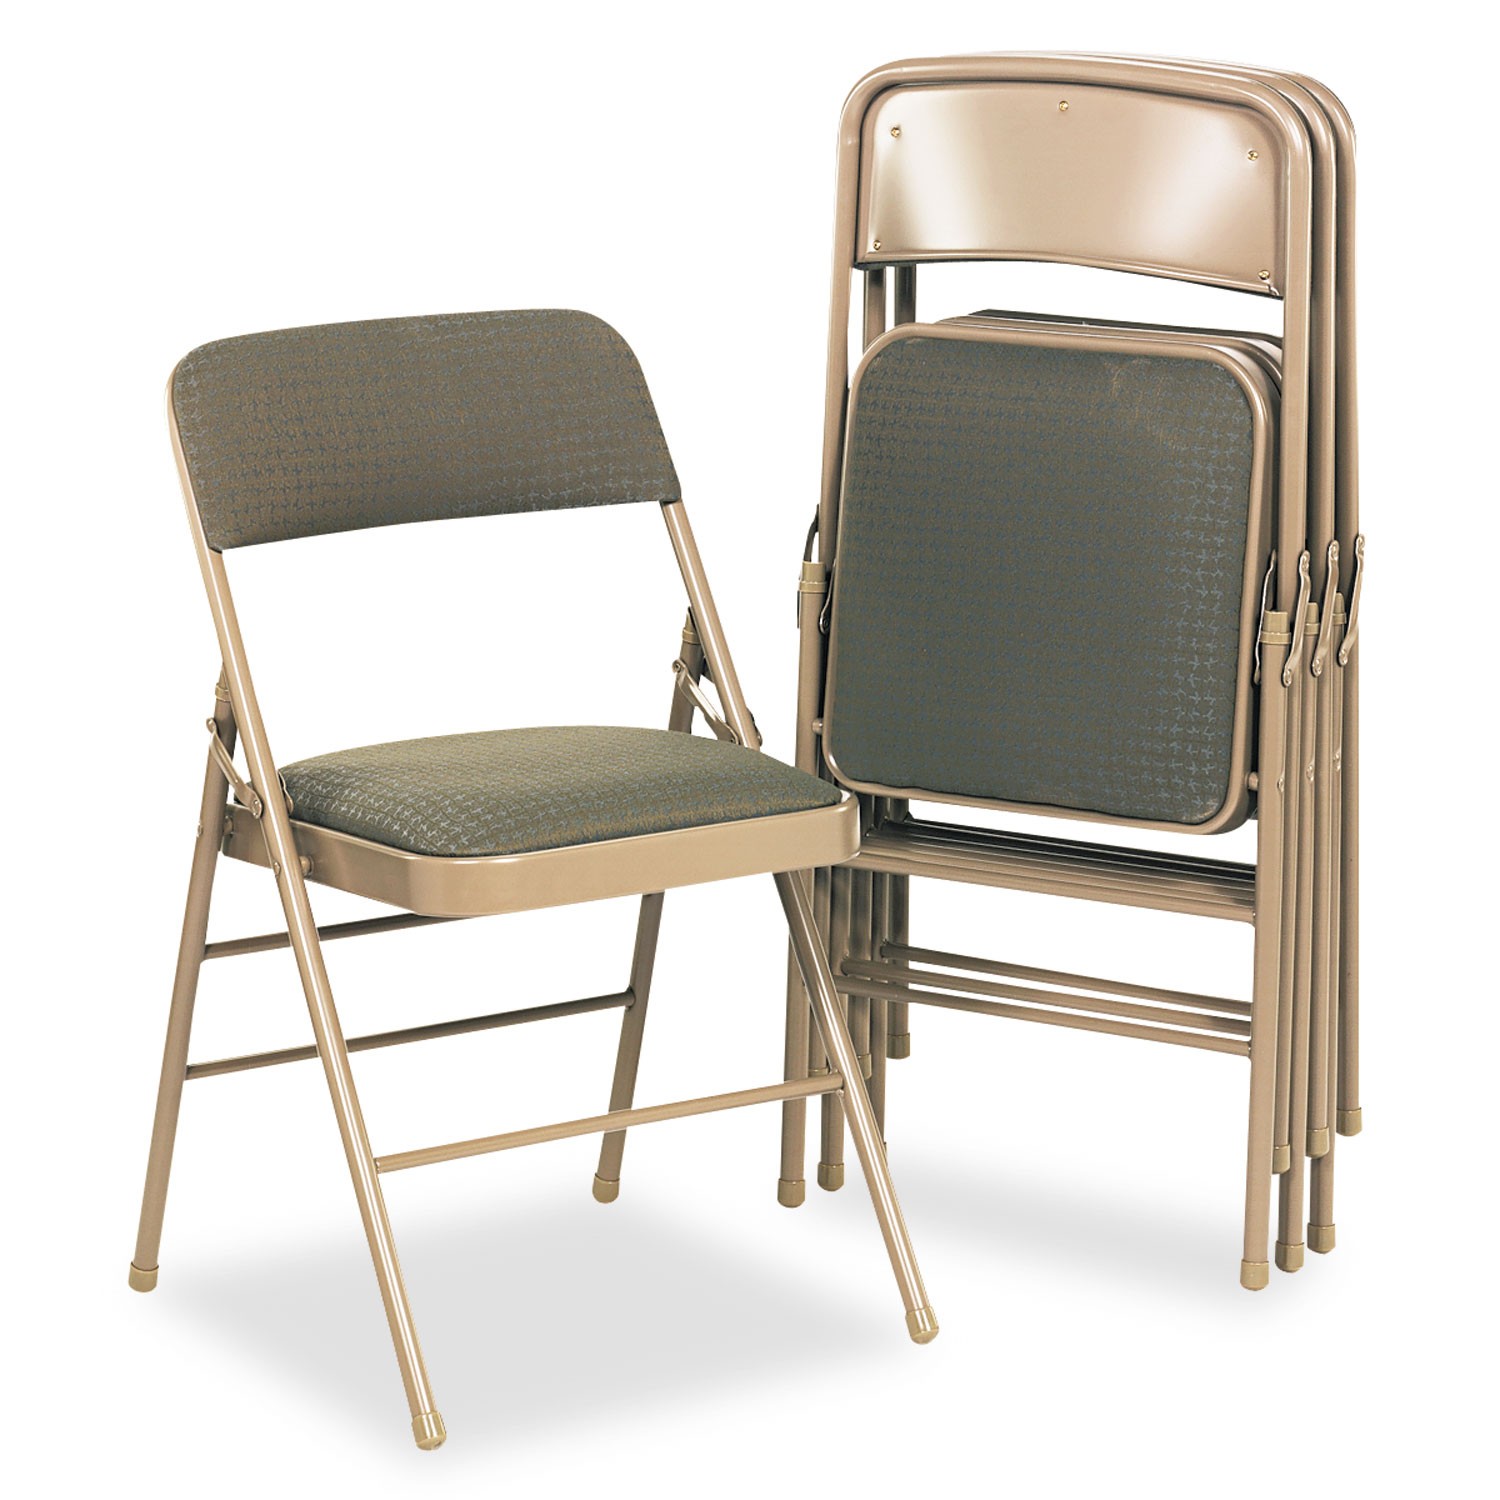 Samsonite 36885CVT4 Fabric Padded Seat/Back Folding Chair, Taupe Frame, Taupe